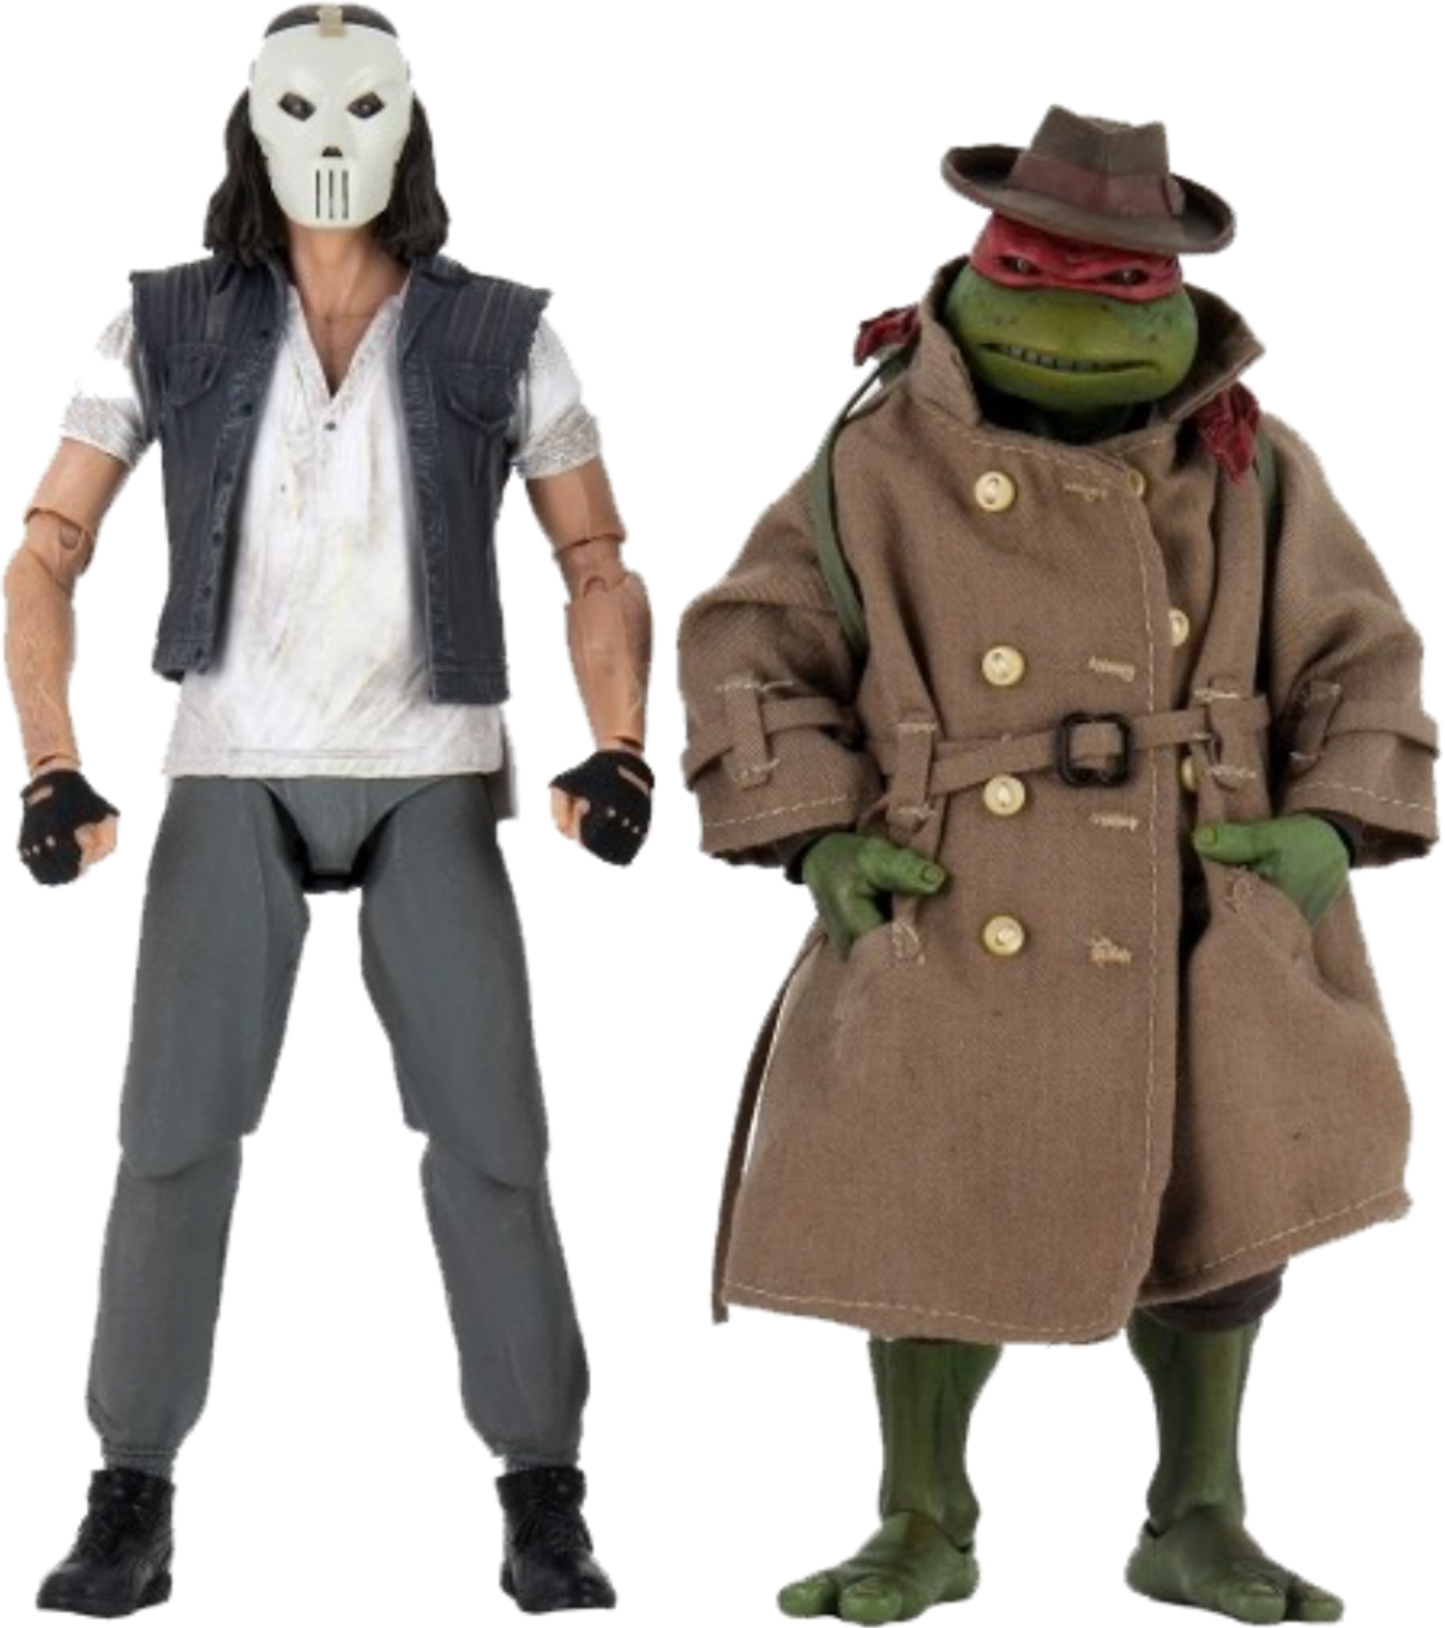 Casey Jones & Raphael Disguise - Teenage Mutant Turtles 2 Pack Neca Action Figures